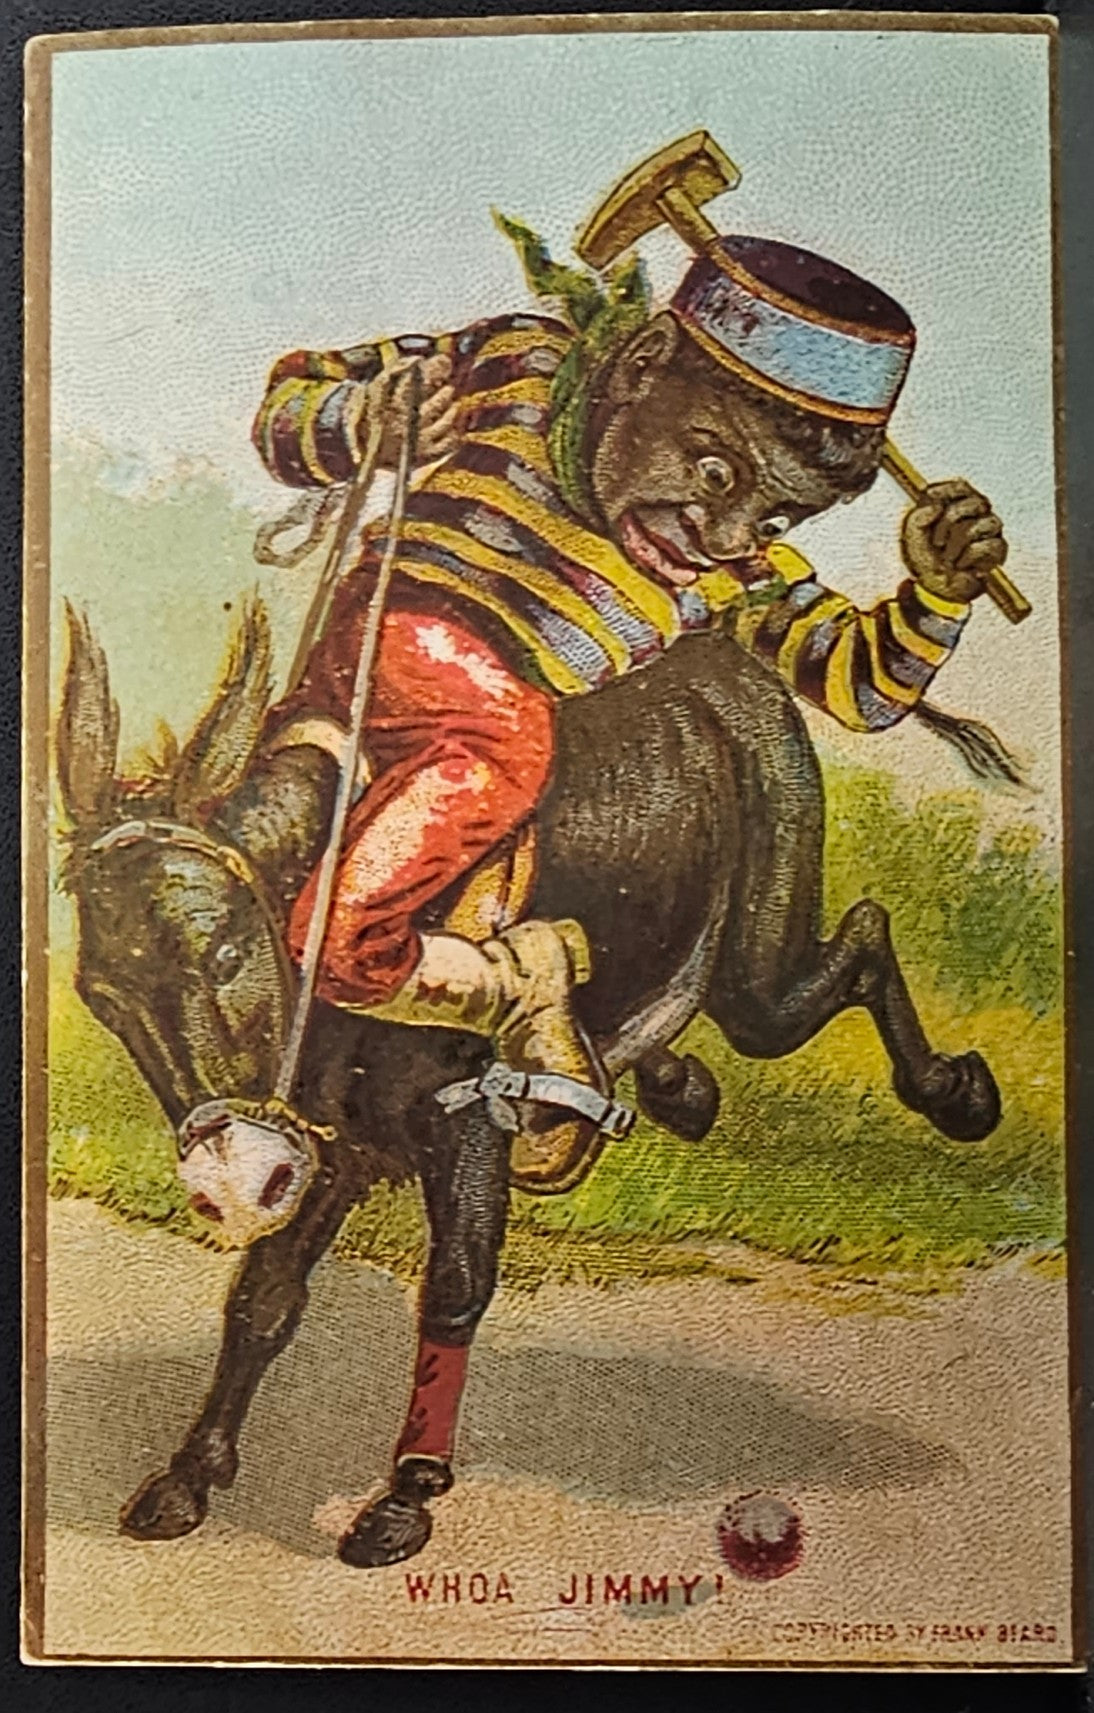 Black Americana Advertising Trade Card Frank Beard Illustration Sport Themed Man on Donkey Playing Polo